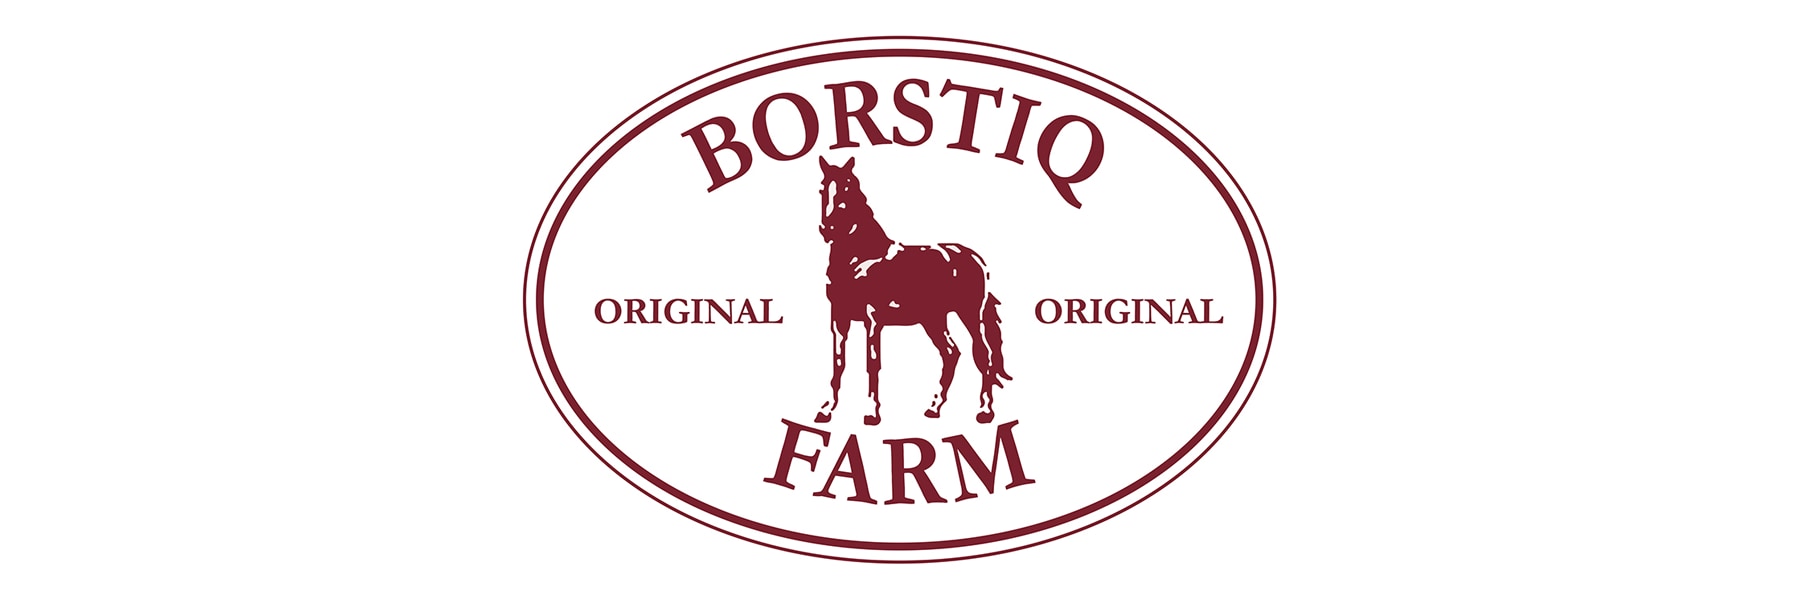 Horse hair brush from Borstiq Farm - Hogstaonline - Hogsta Ridsport